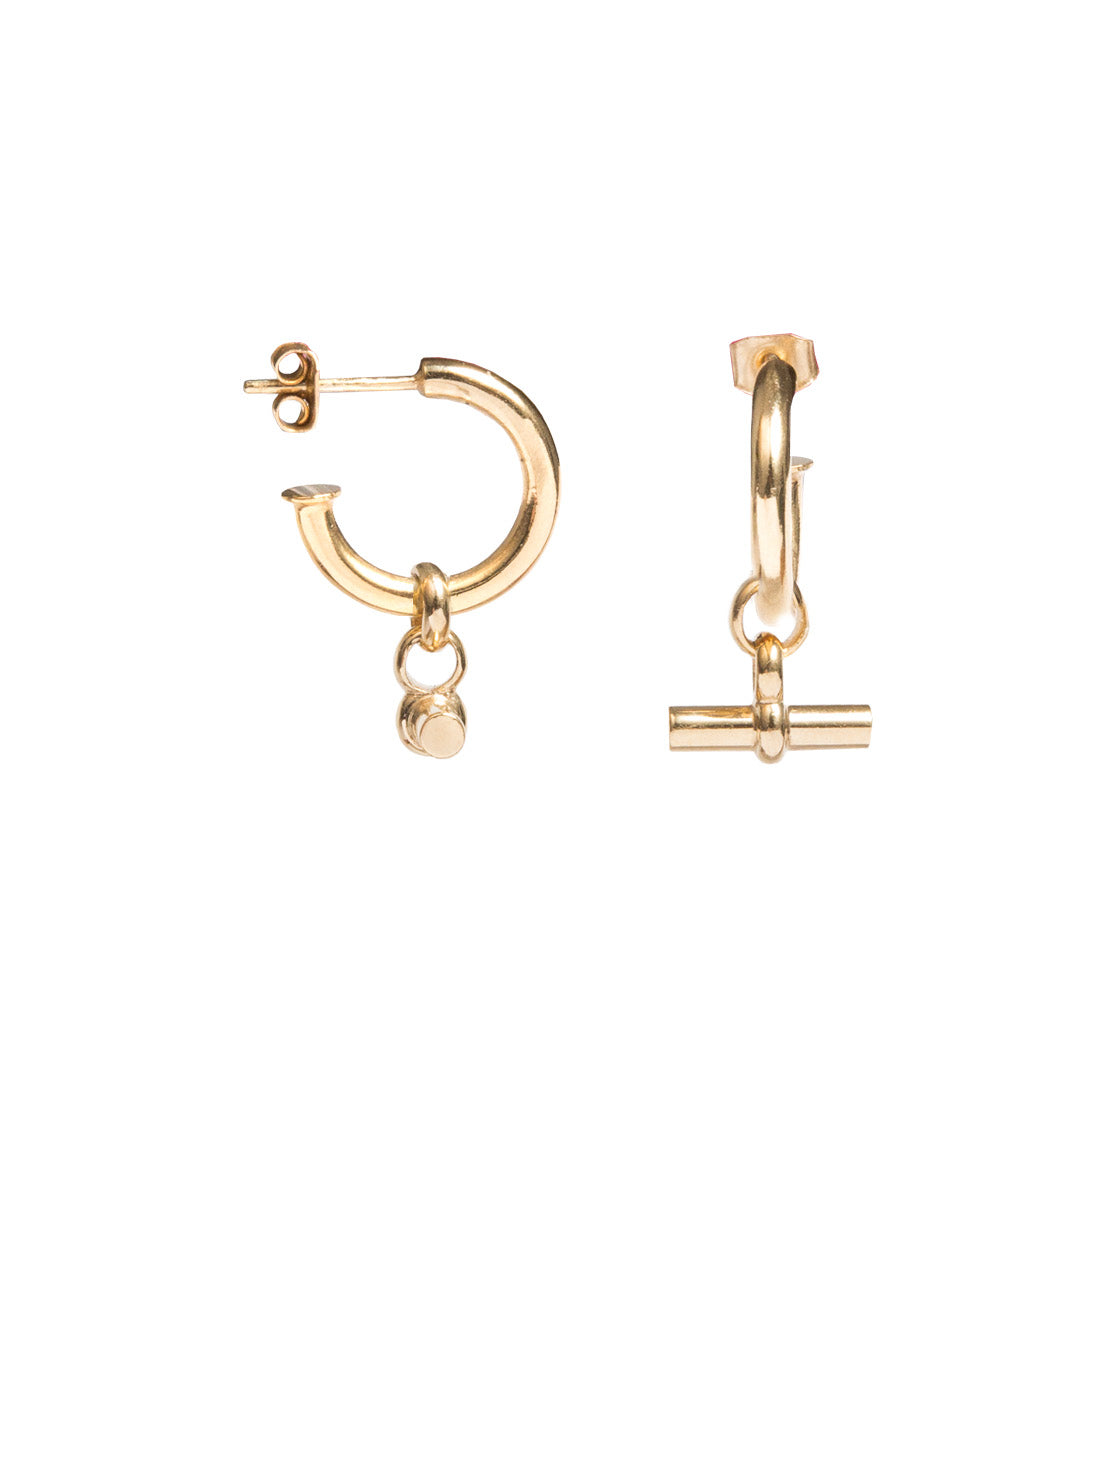 Small gold t bar earrings